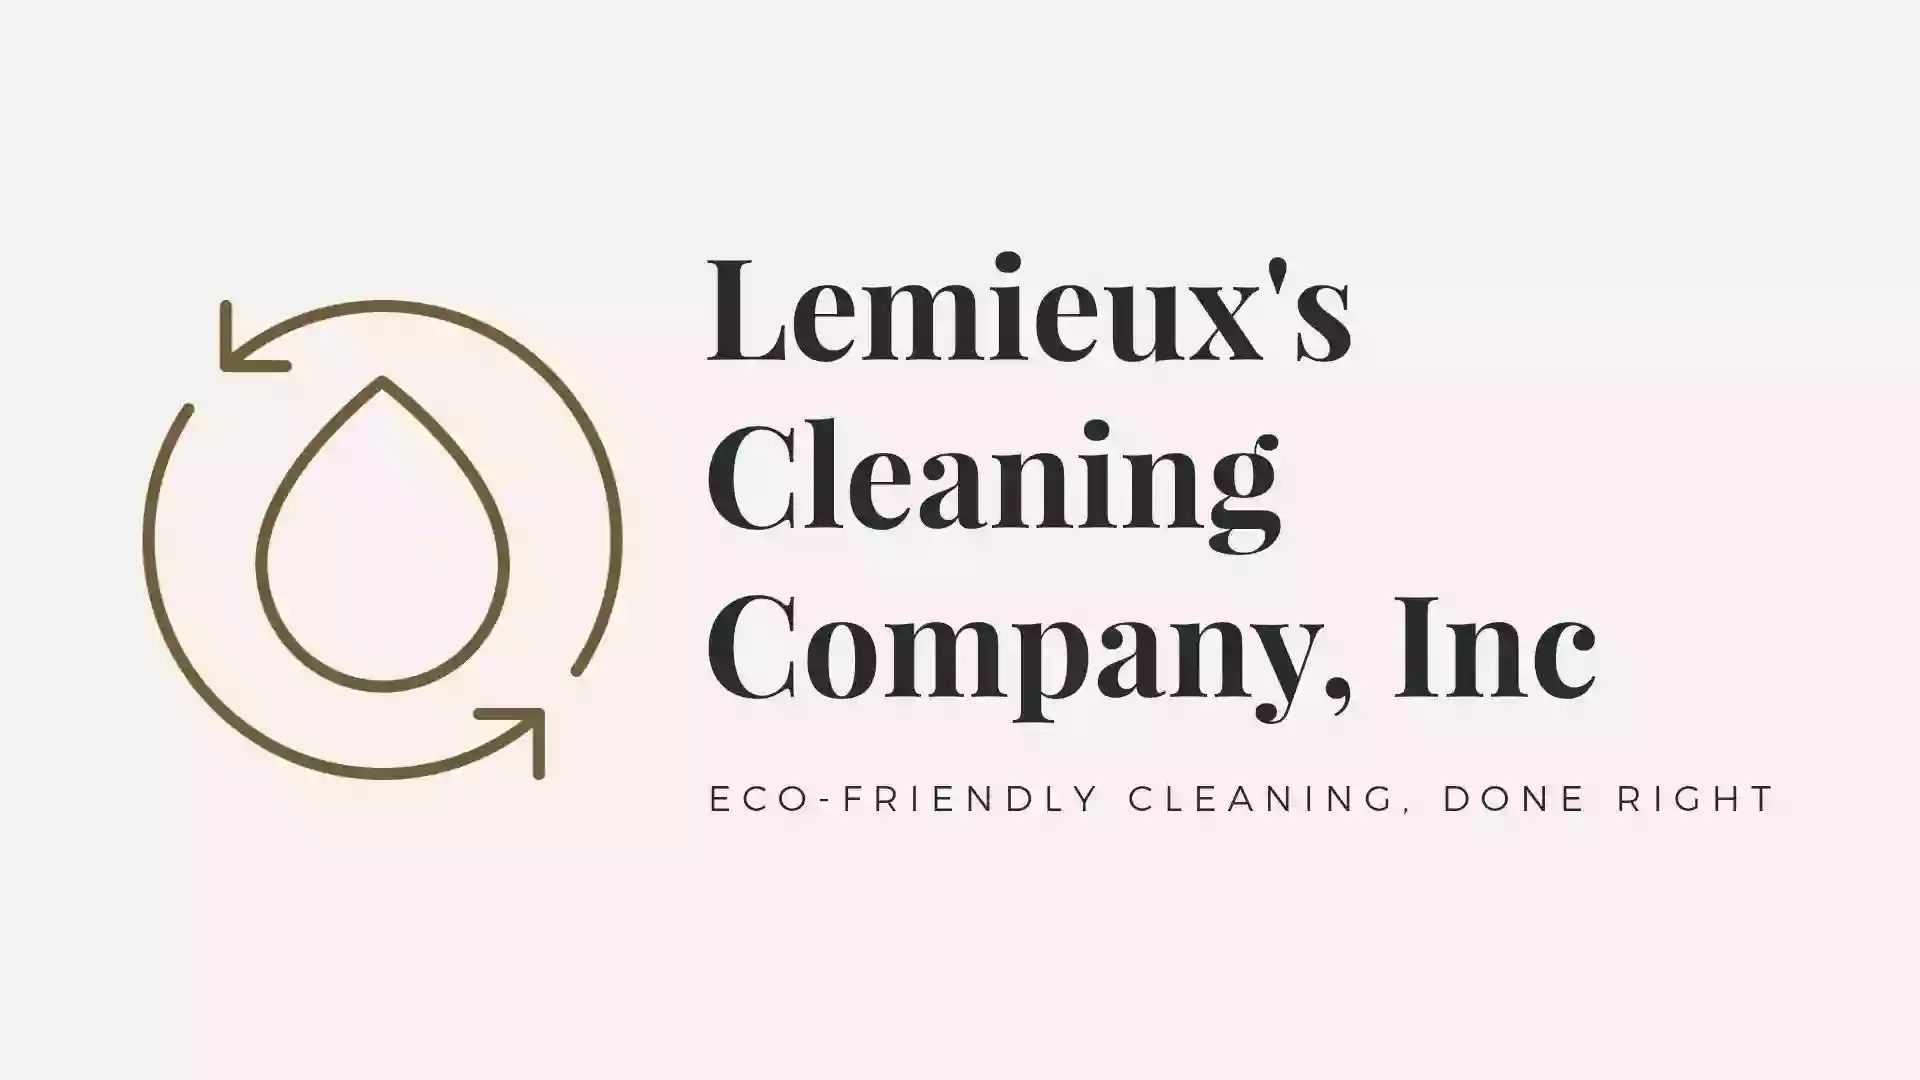 Lemieux's Cleaning Company, Inc